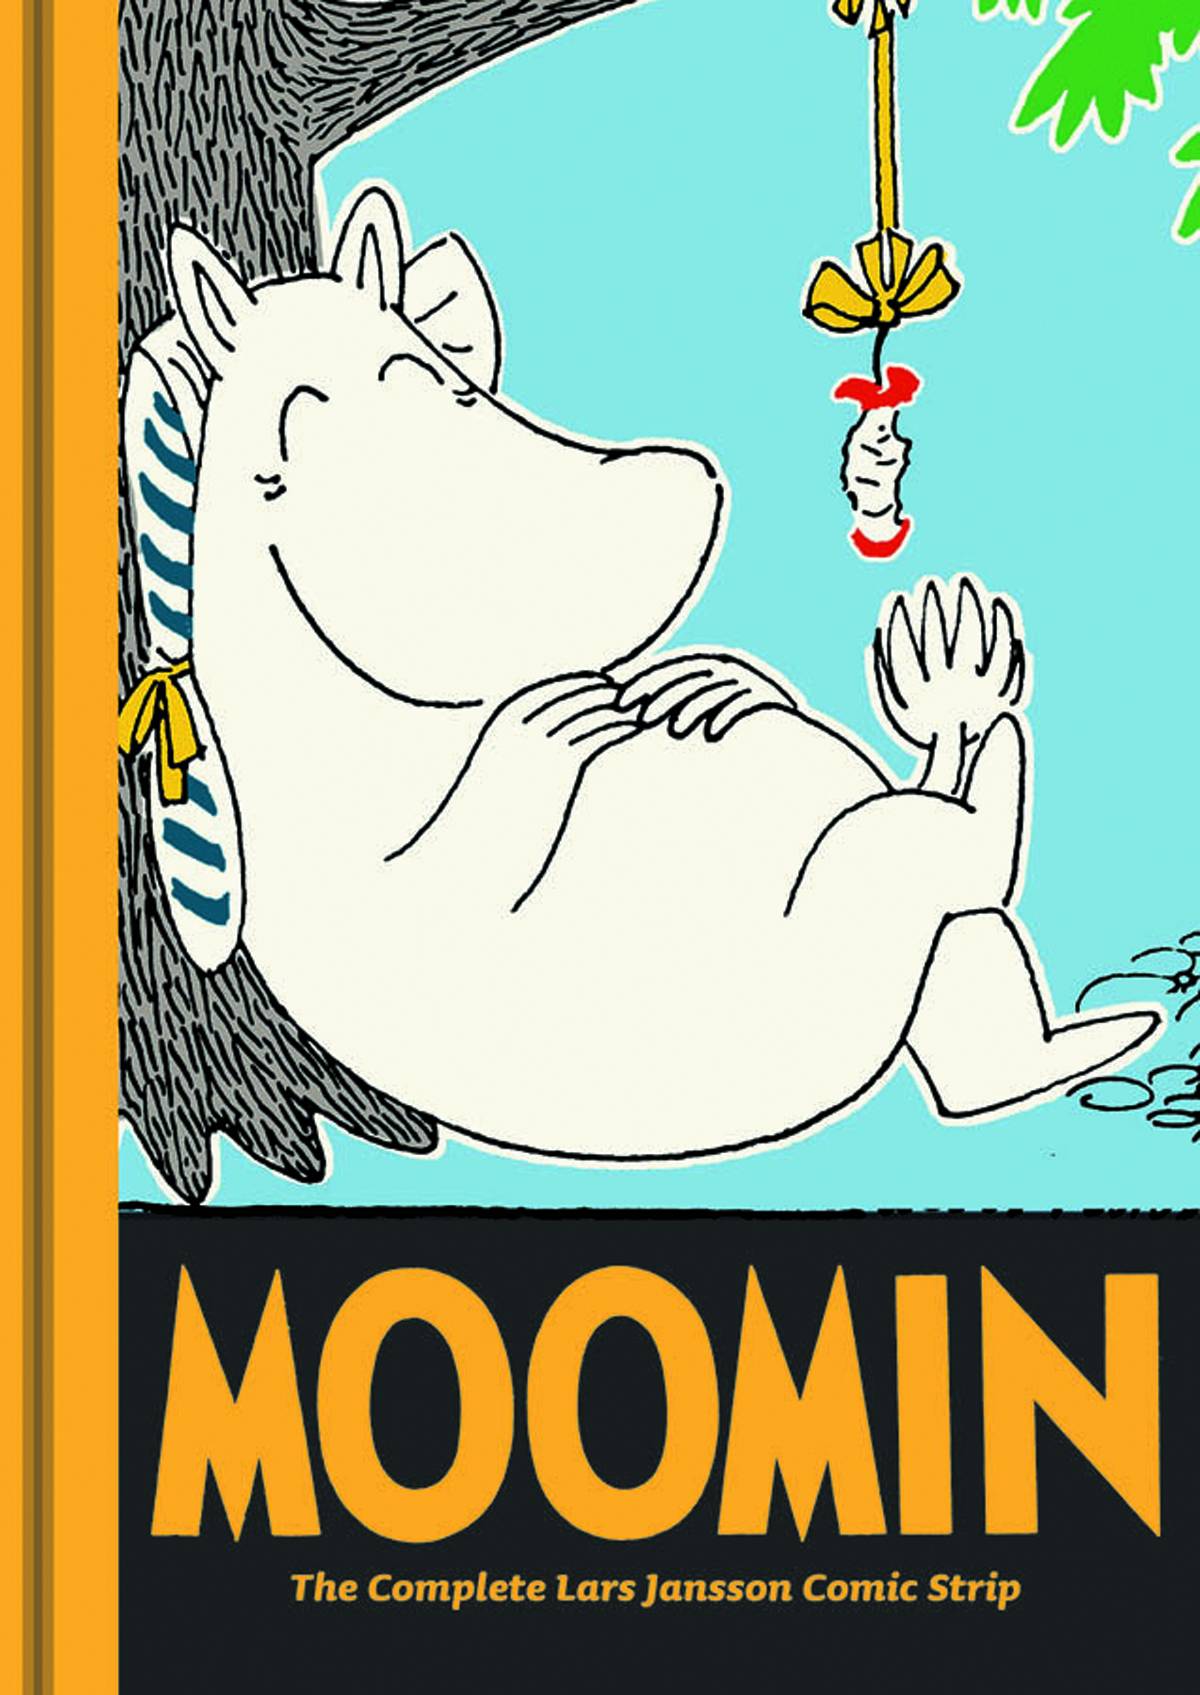 Moomin Complete Tove Jannson Comic Strip Hardcover Graphic Novel Volume 8